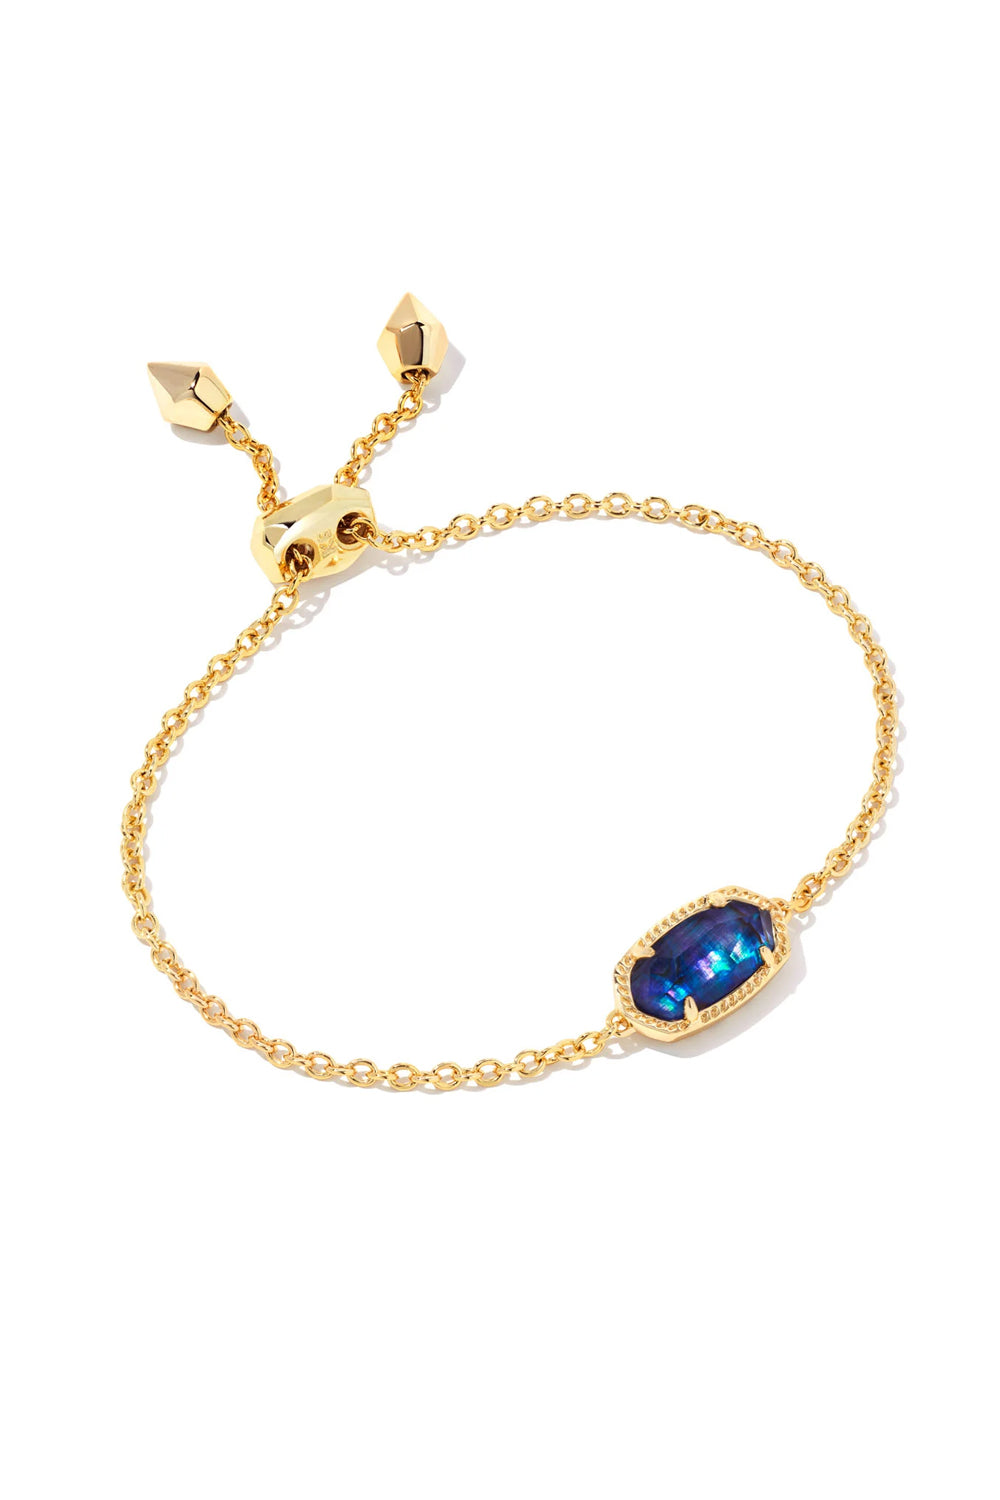 Kendra Scott: Elaina Adjustable Chain Bracelet - Navy Abalone | Makk Fashions